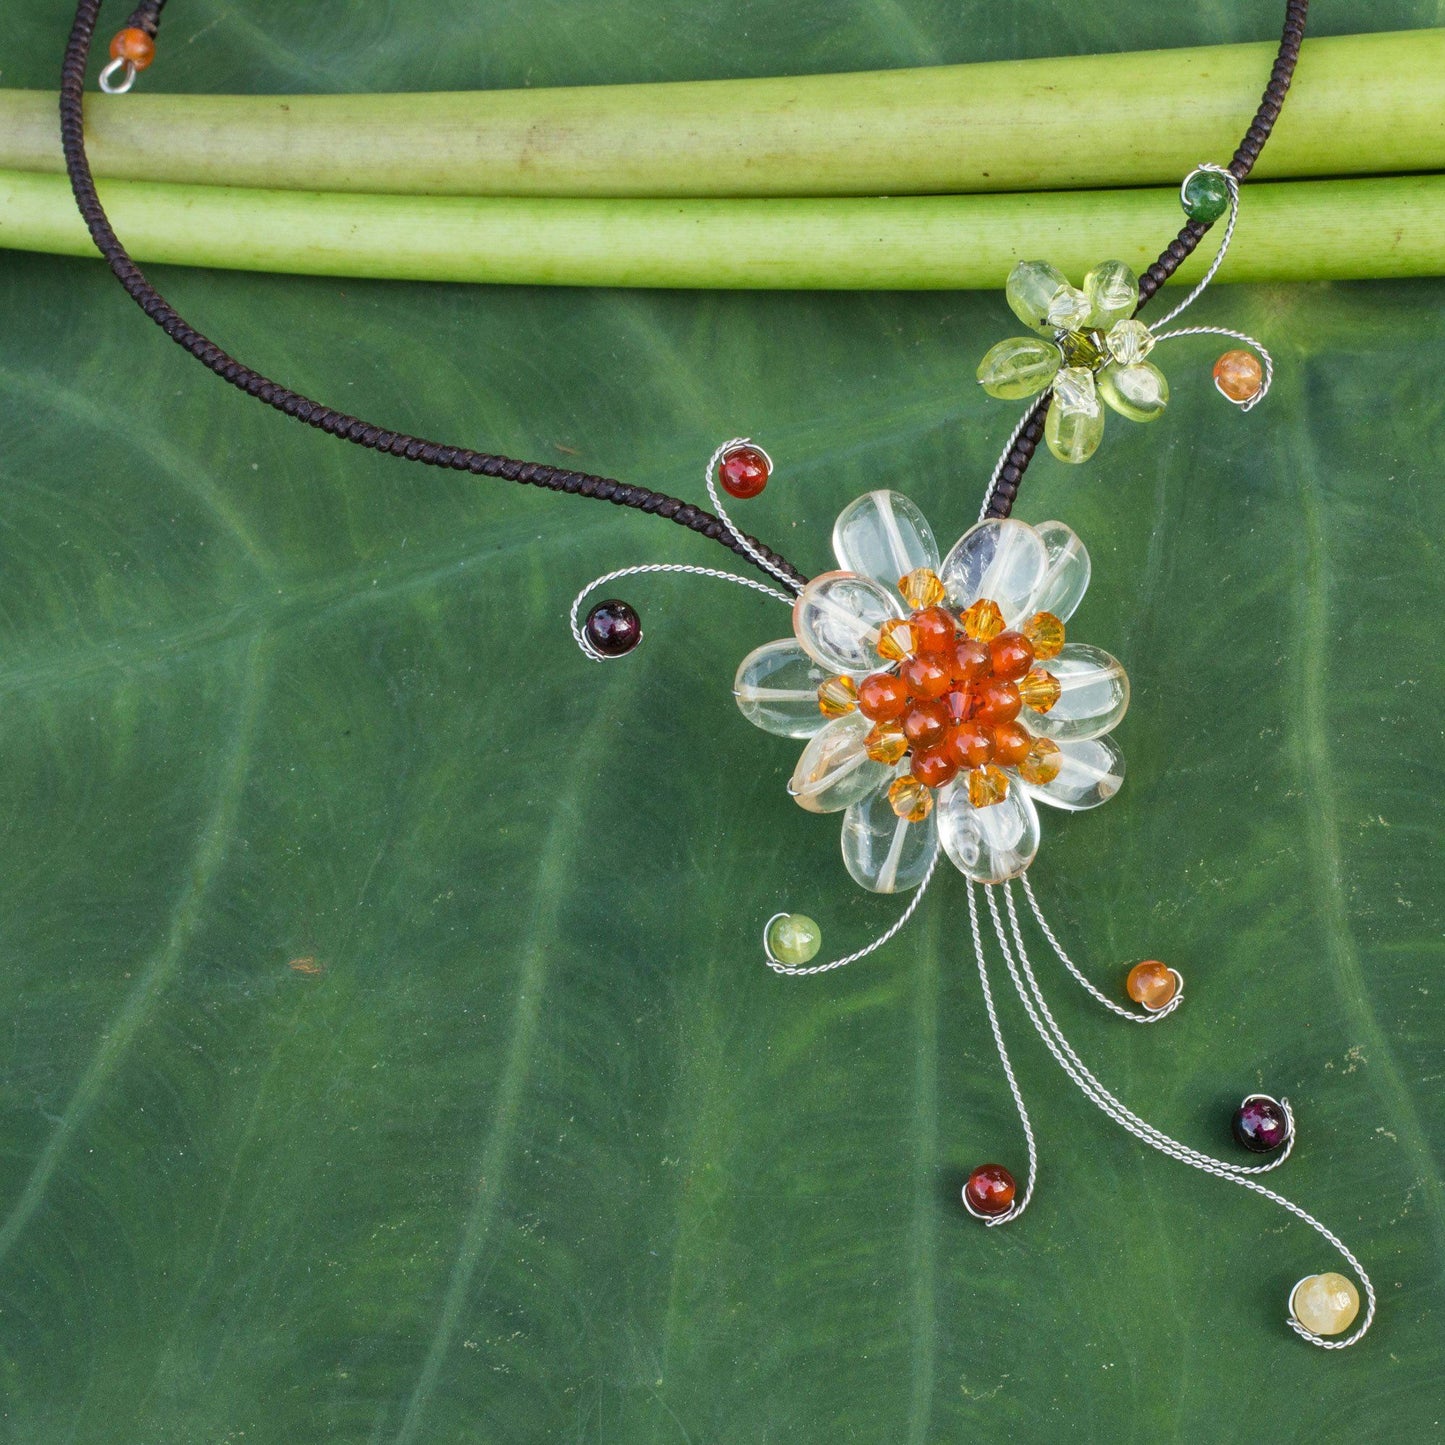 Gorgeous Blossom Multi-Gem Choker Necklace